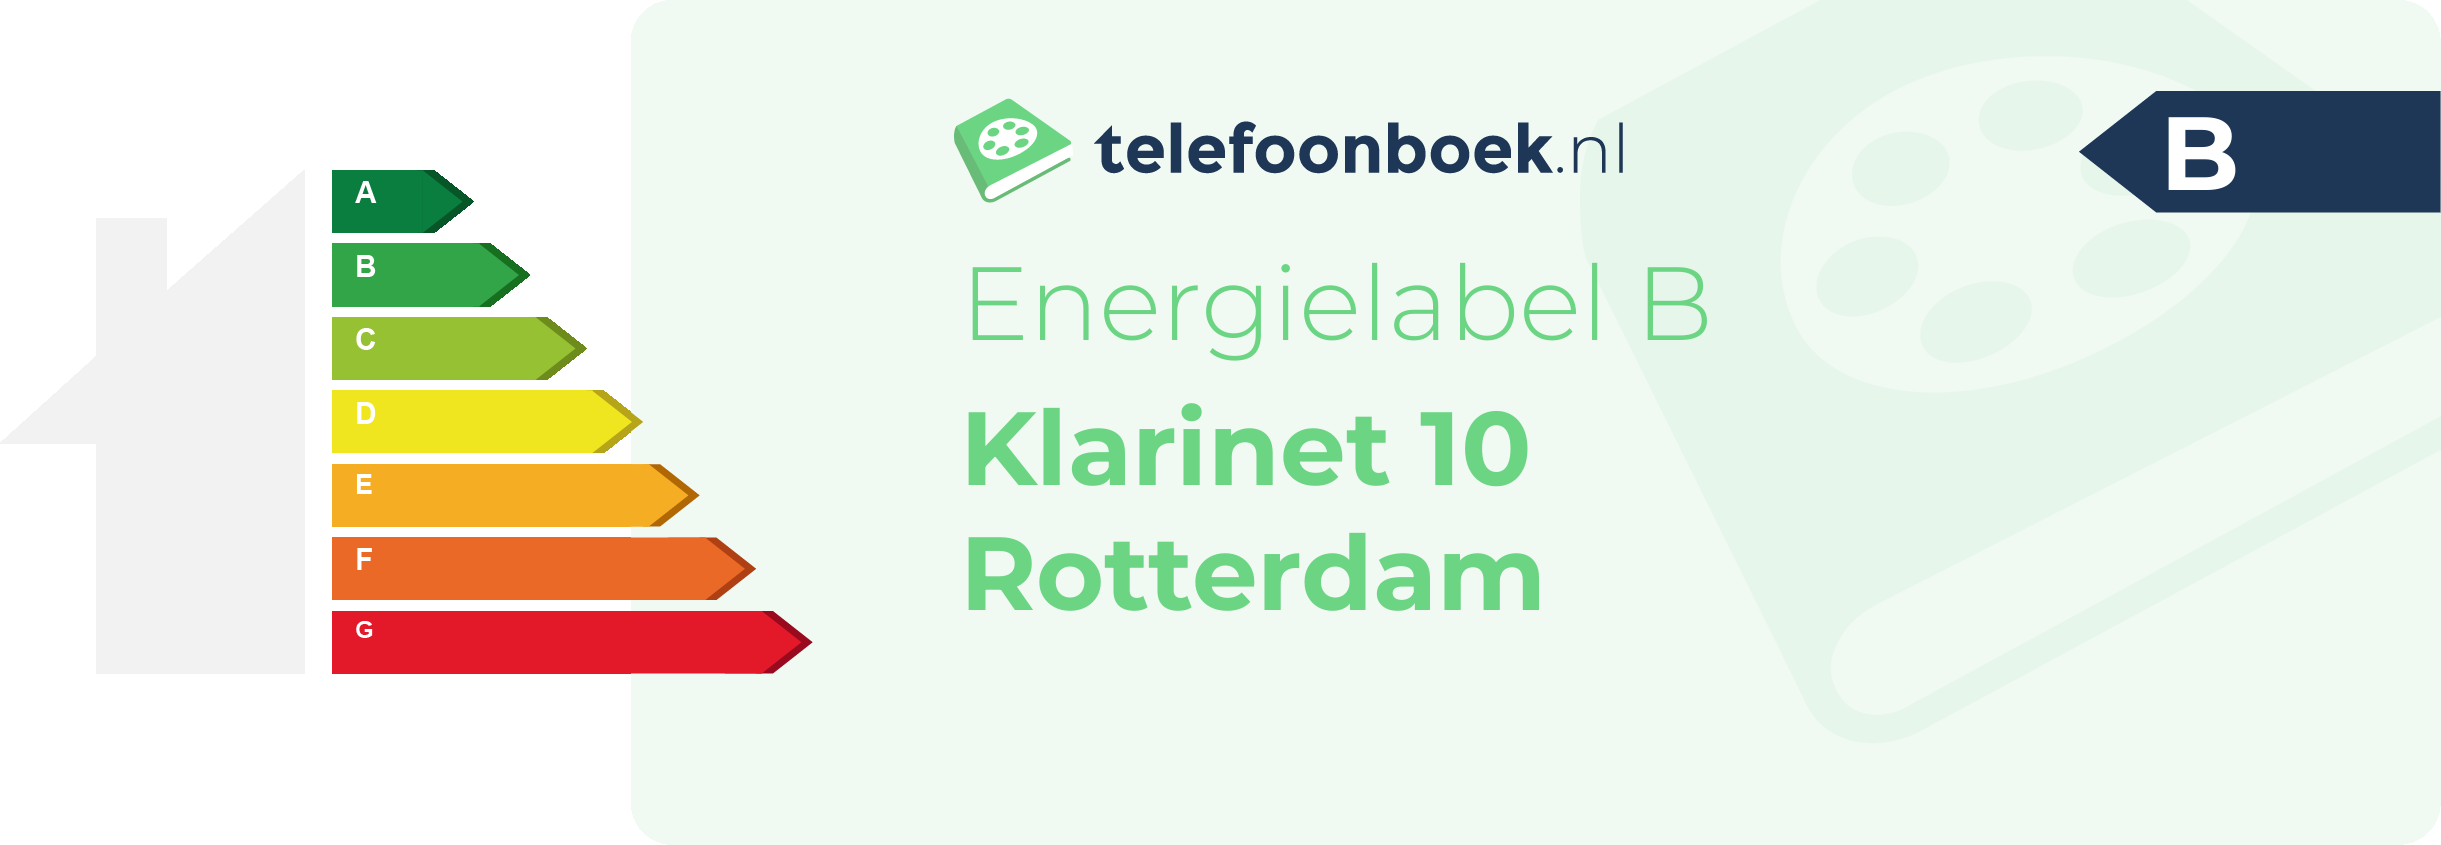 Energielabel Klarinet 10 Rotterdam